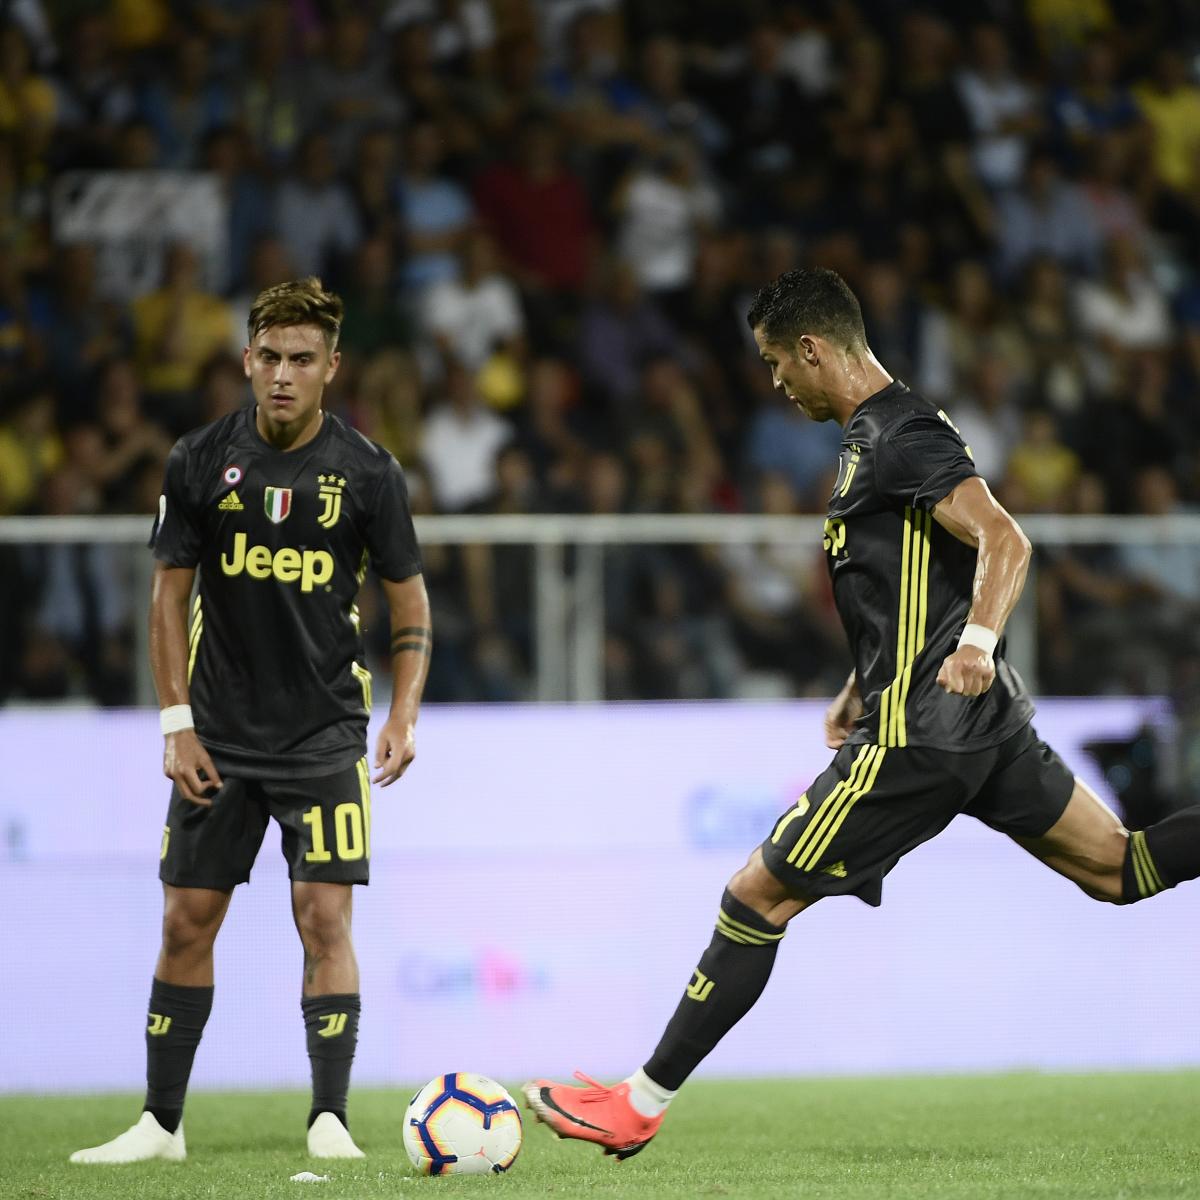 Max Allegri Cristiano Ronaldo Only To Take Long Range Juventus Free Kicks Bleacher Report Latest News Videos And Highlights